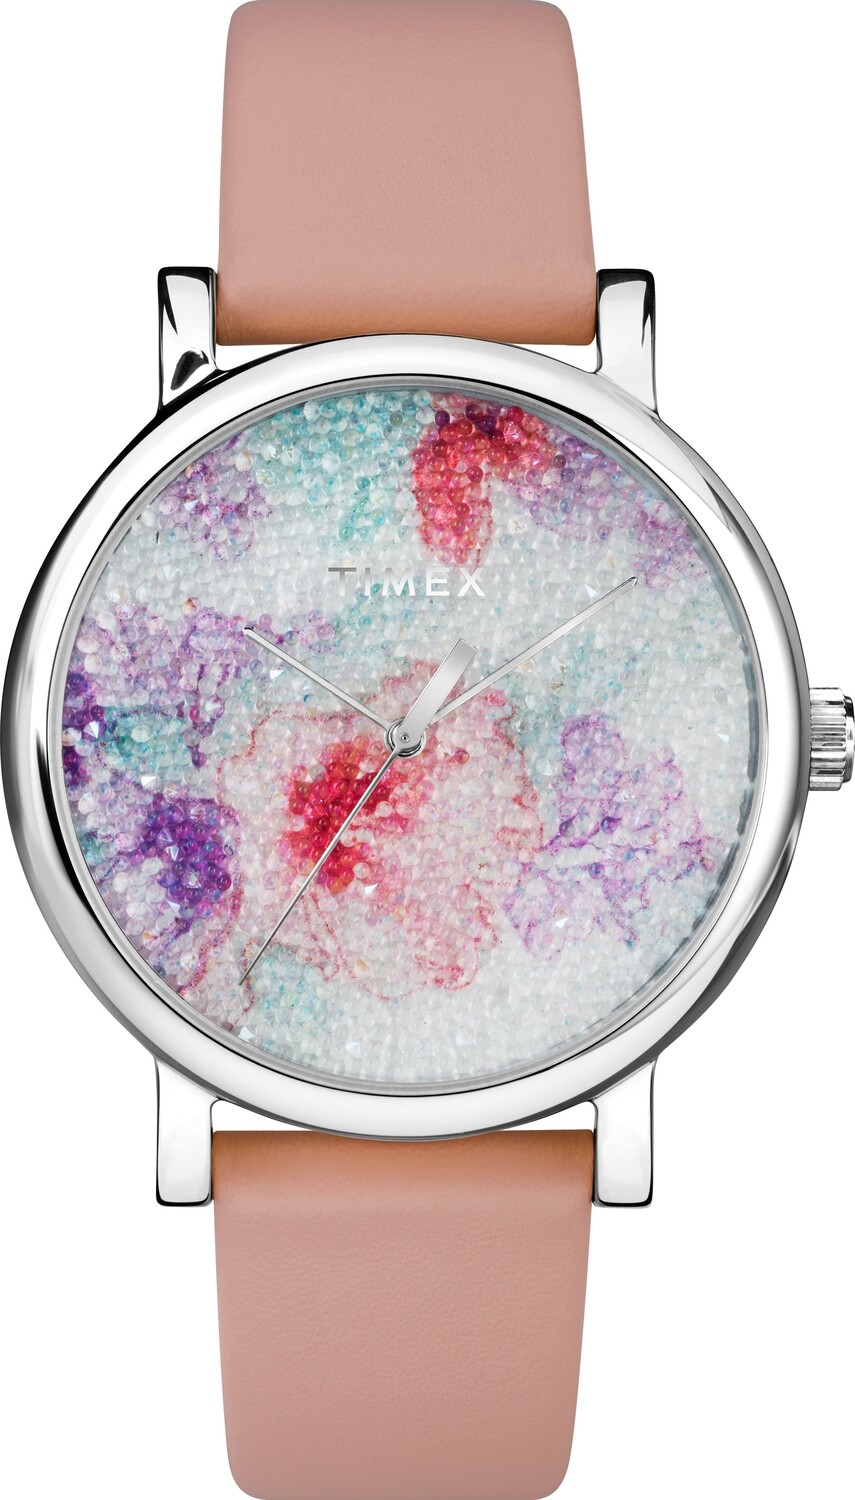 Timex TW2R84300 Crystal Bloom With Swarovski   Crystals 38mm Leather Strap Watch